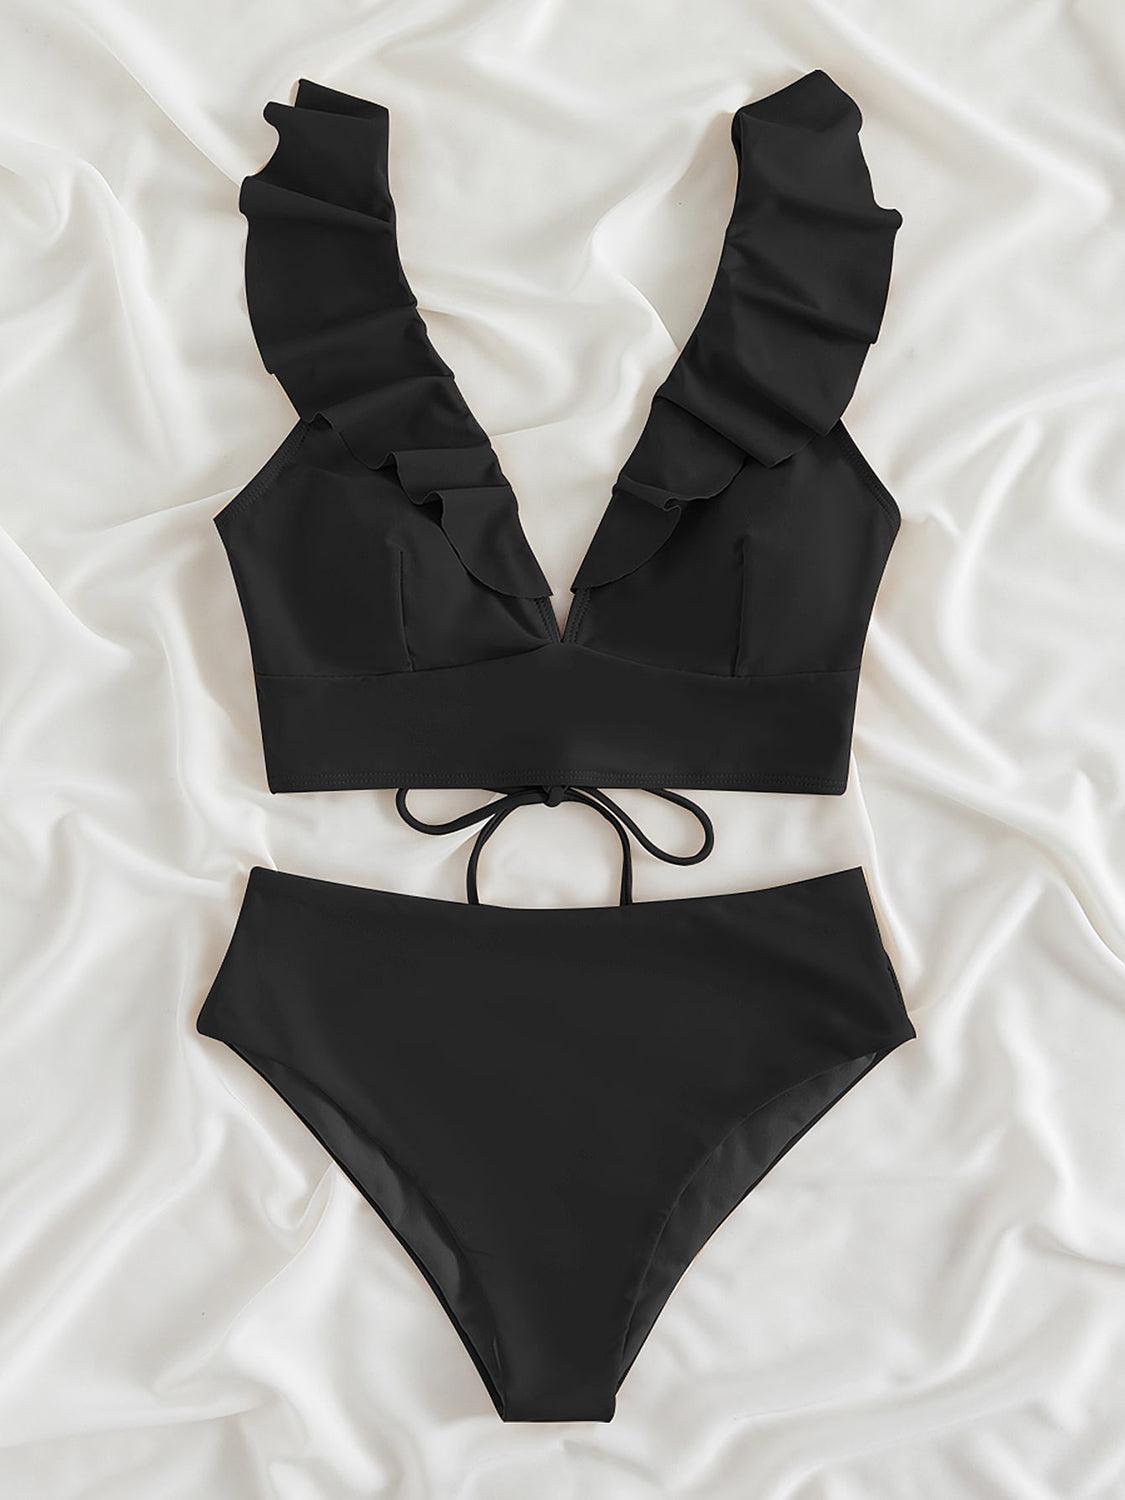 a black bikini top and bottom on a white sheet